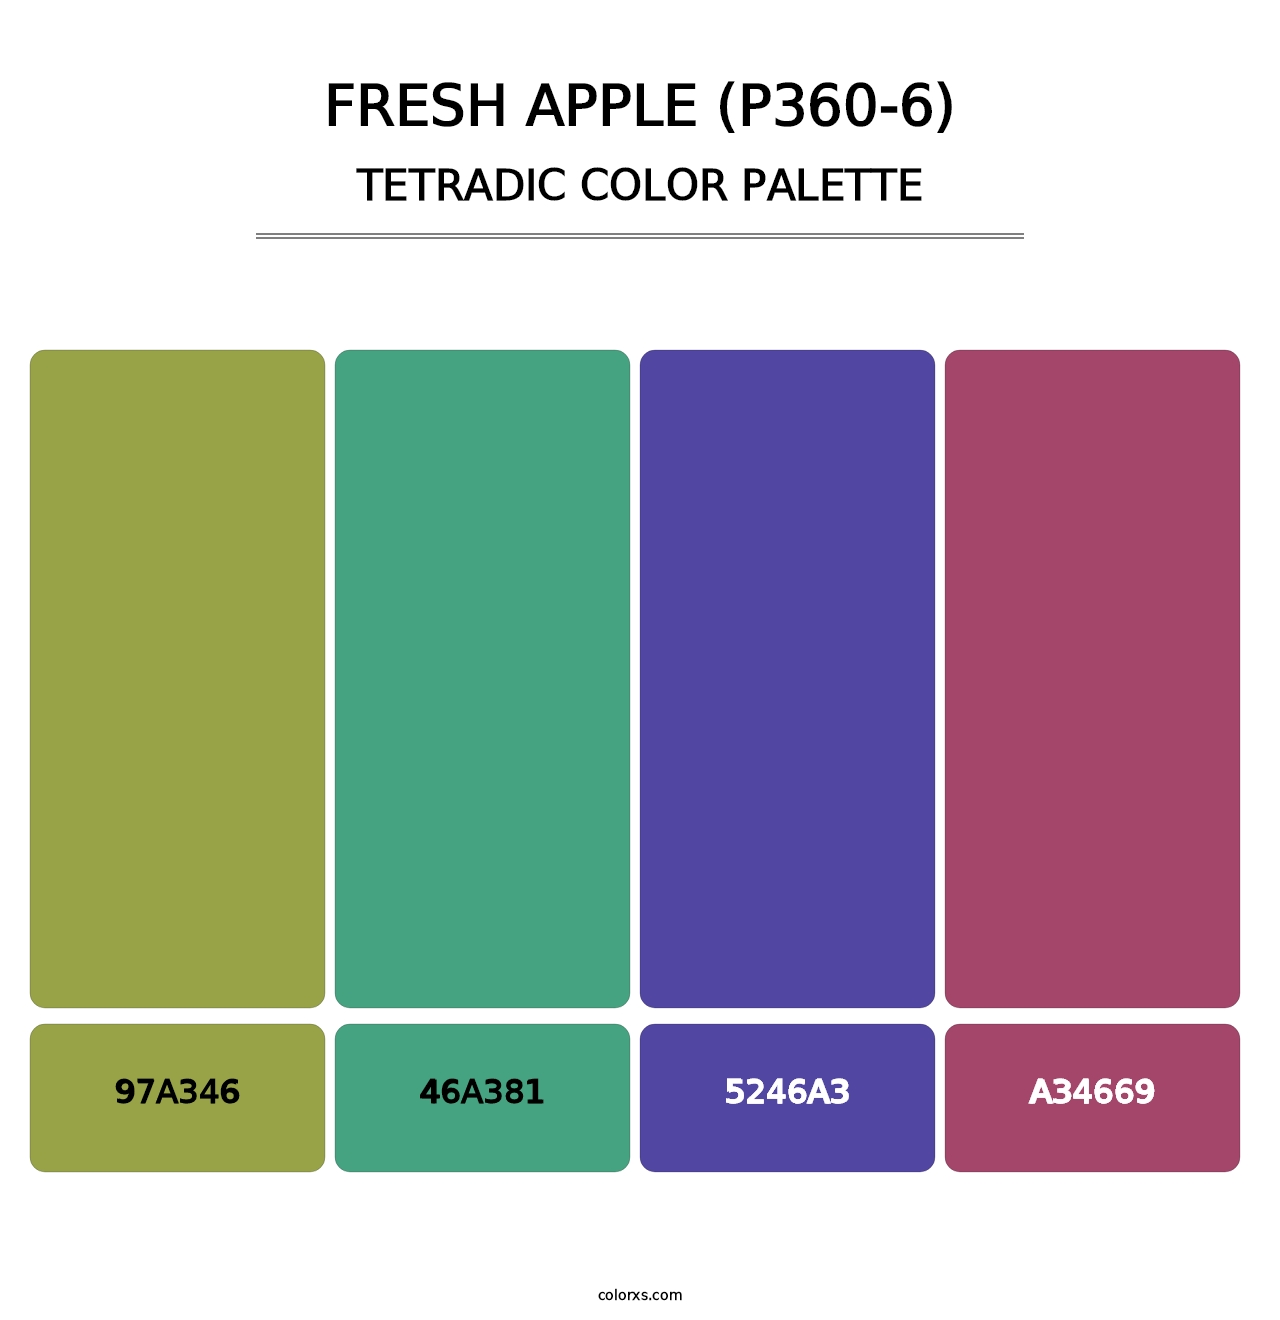 Fresh Apple (P360-6) - Tetradic Color Palette